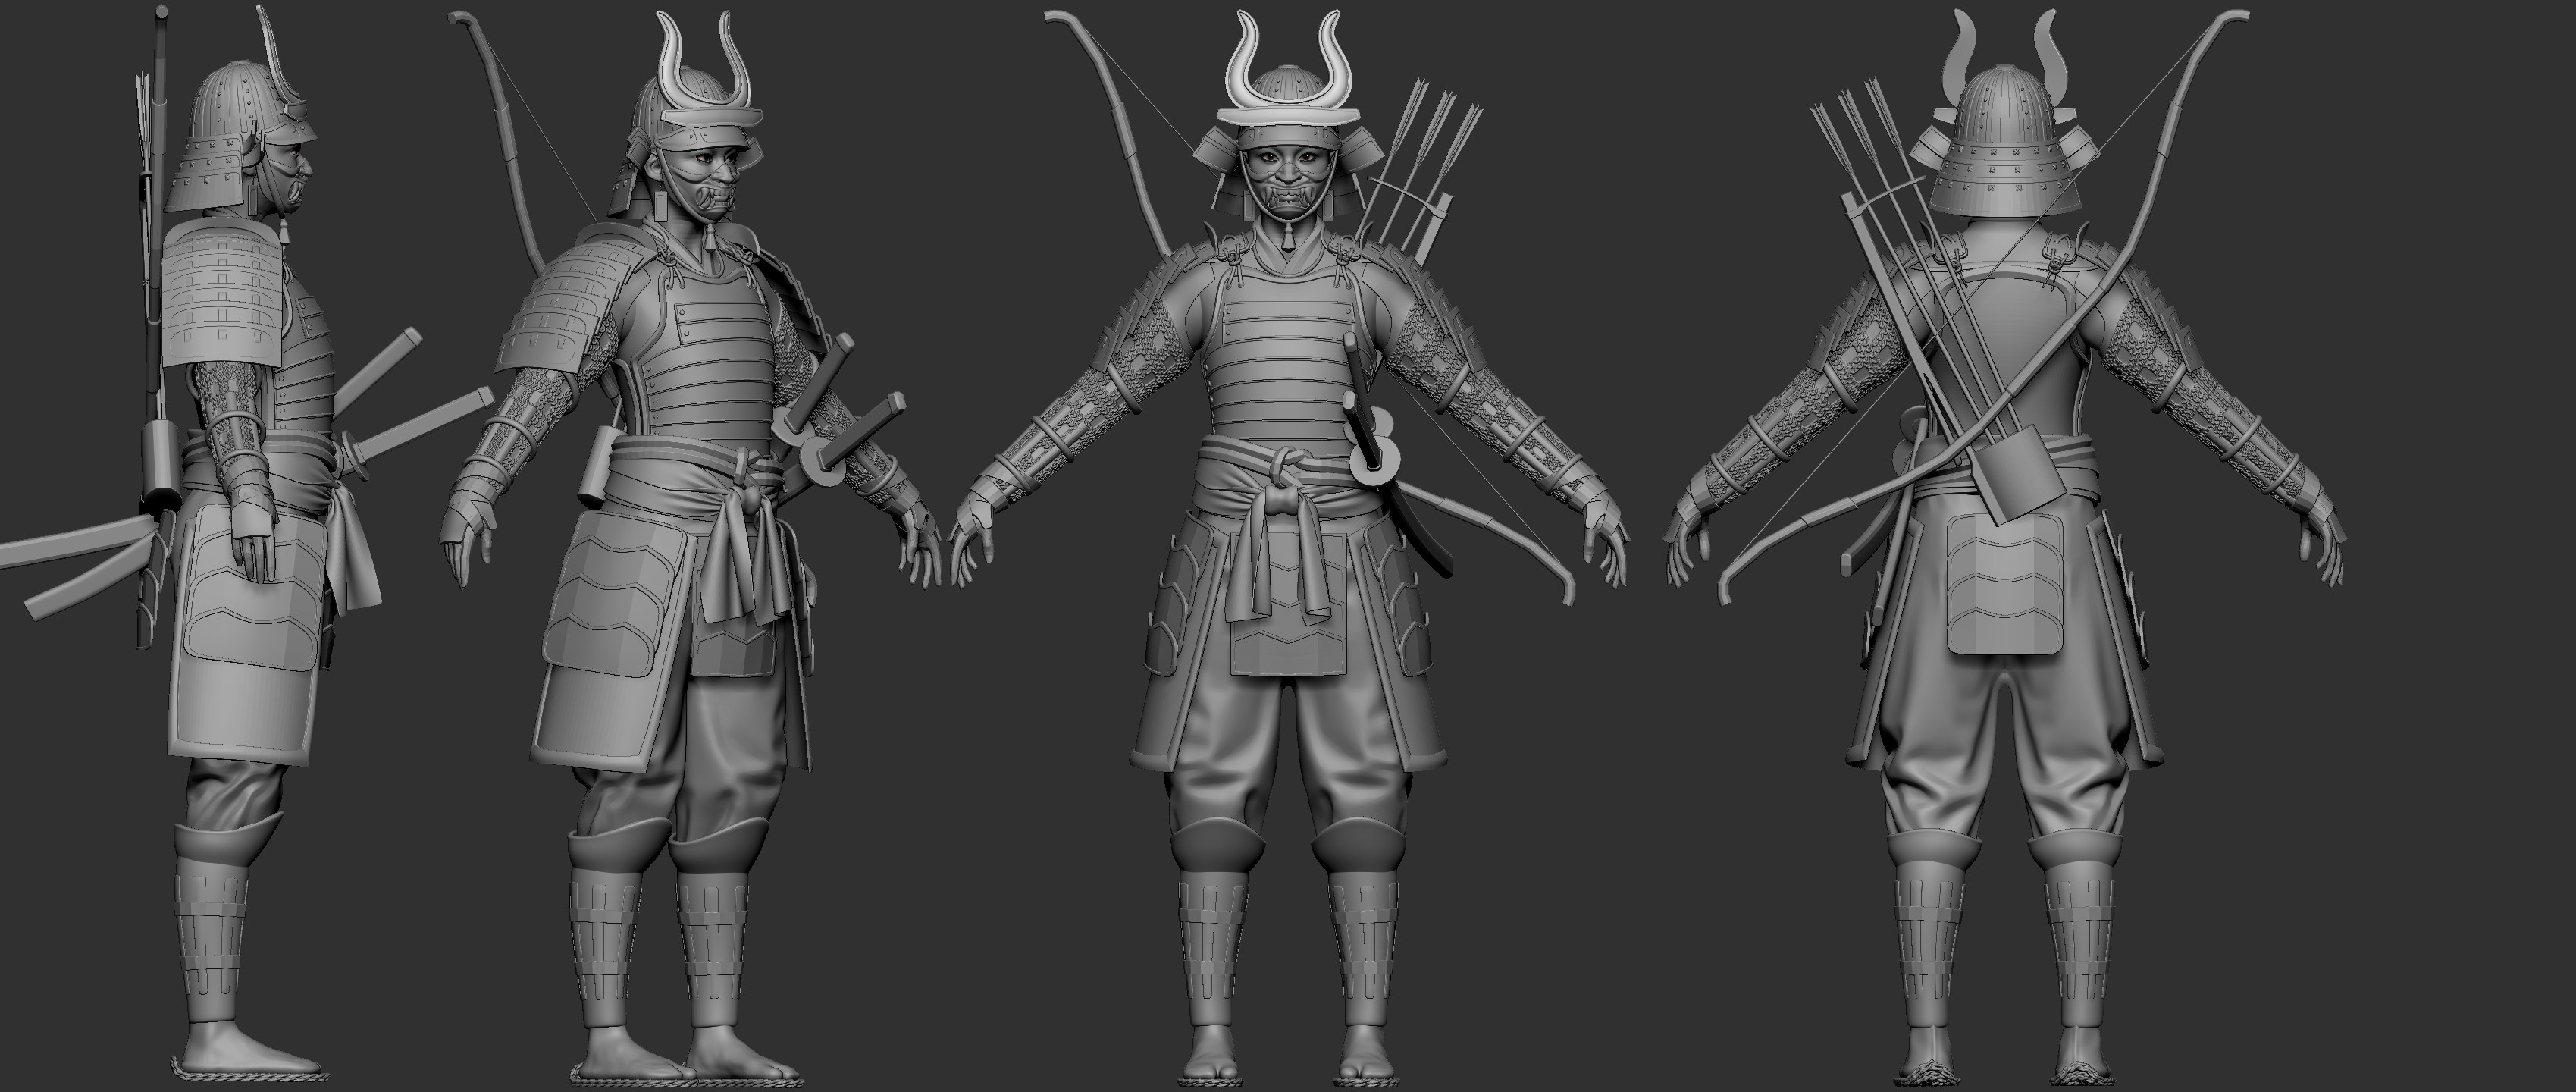 ryan-johnson-samurai-zbrush-render-1.jpg